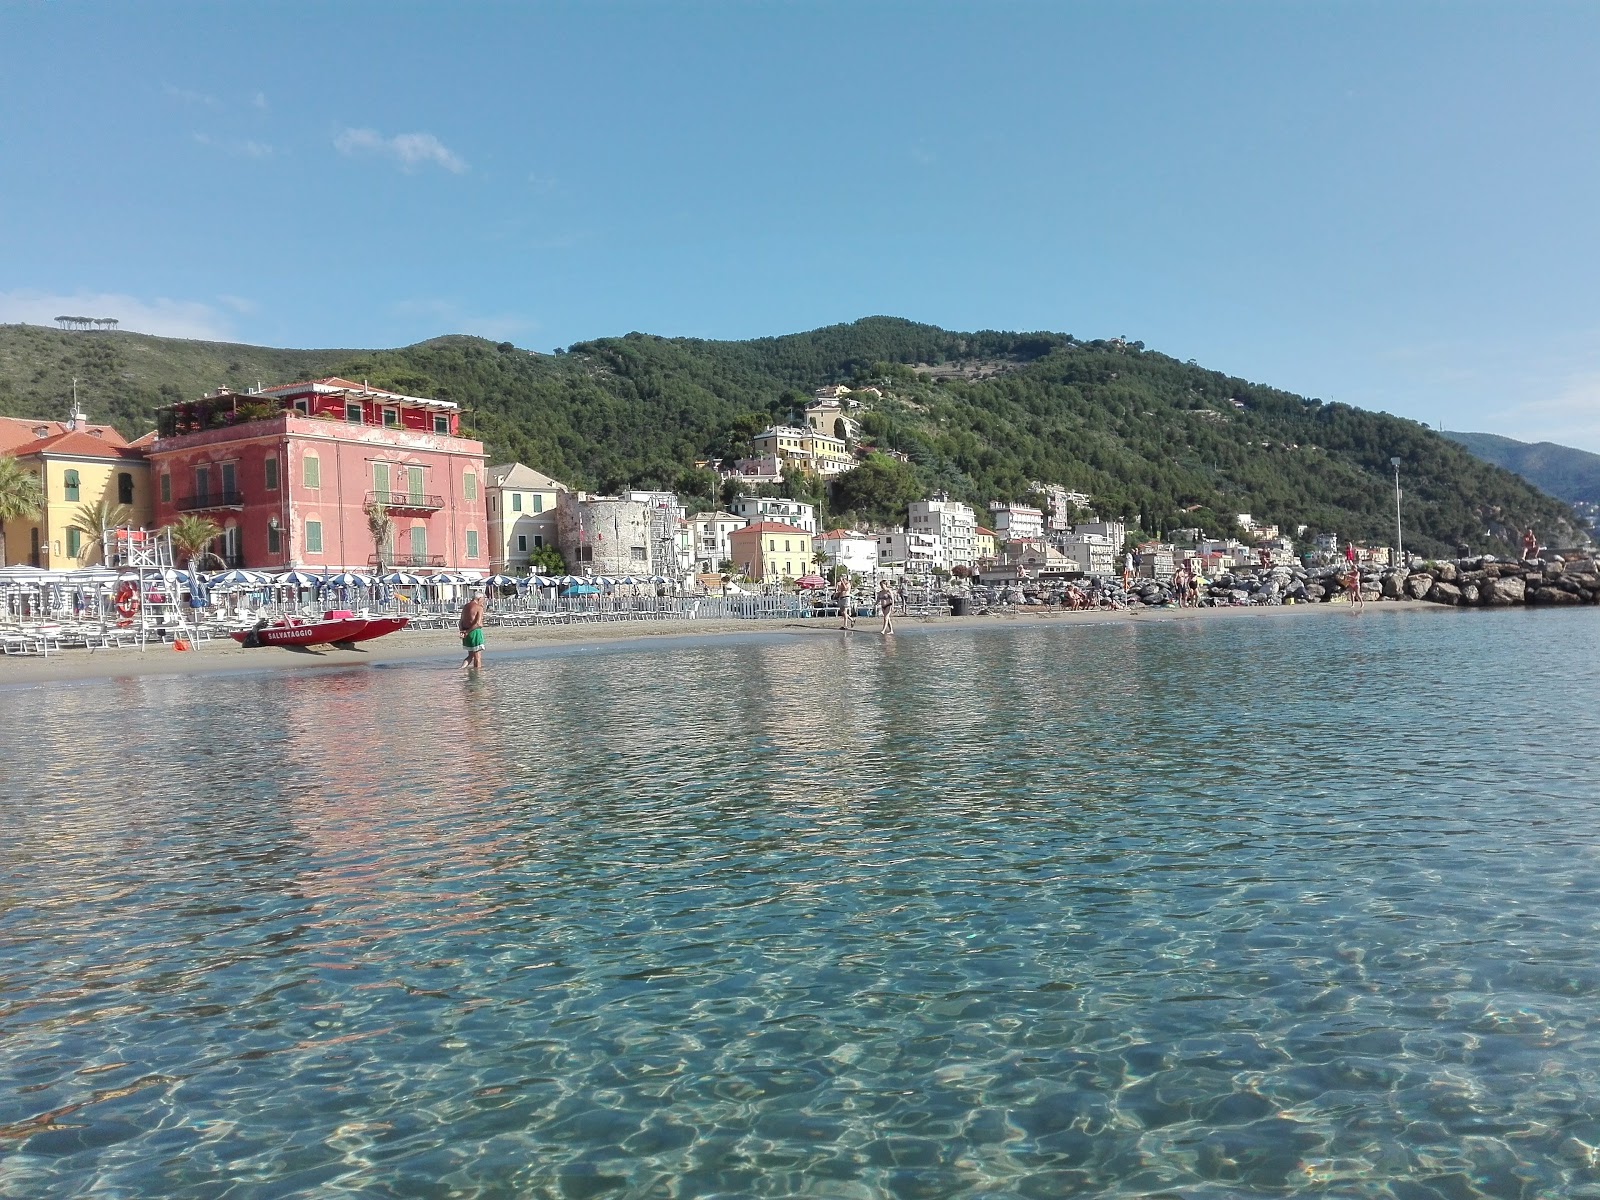 Foto af Spiaggia di Laigueglia med blåt vand overflade